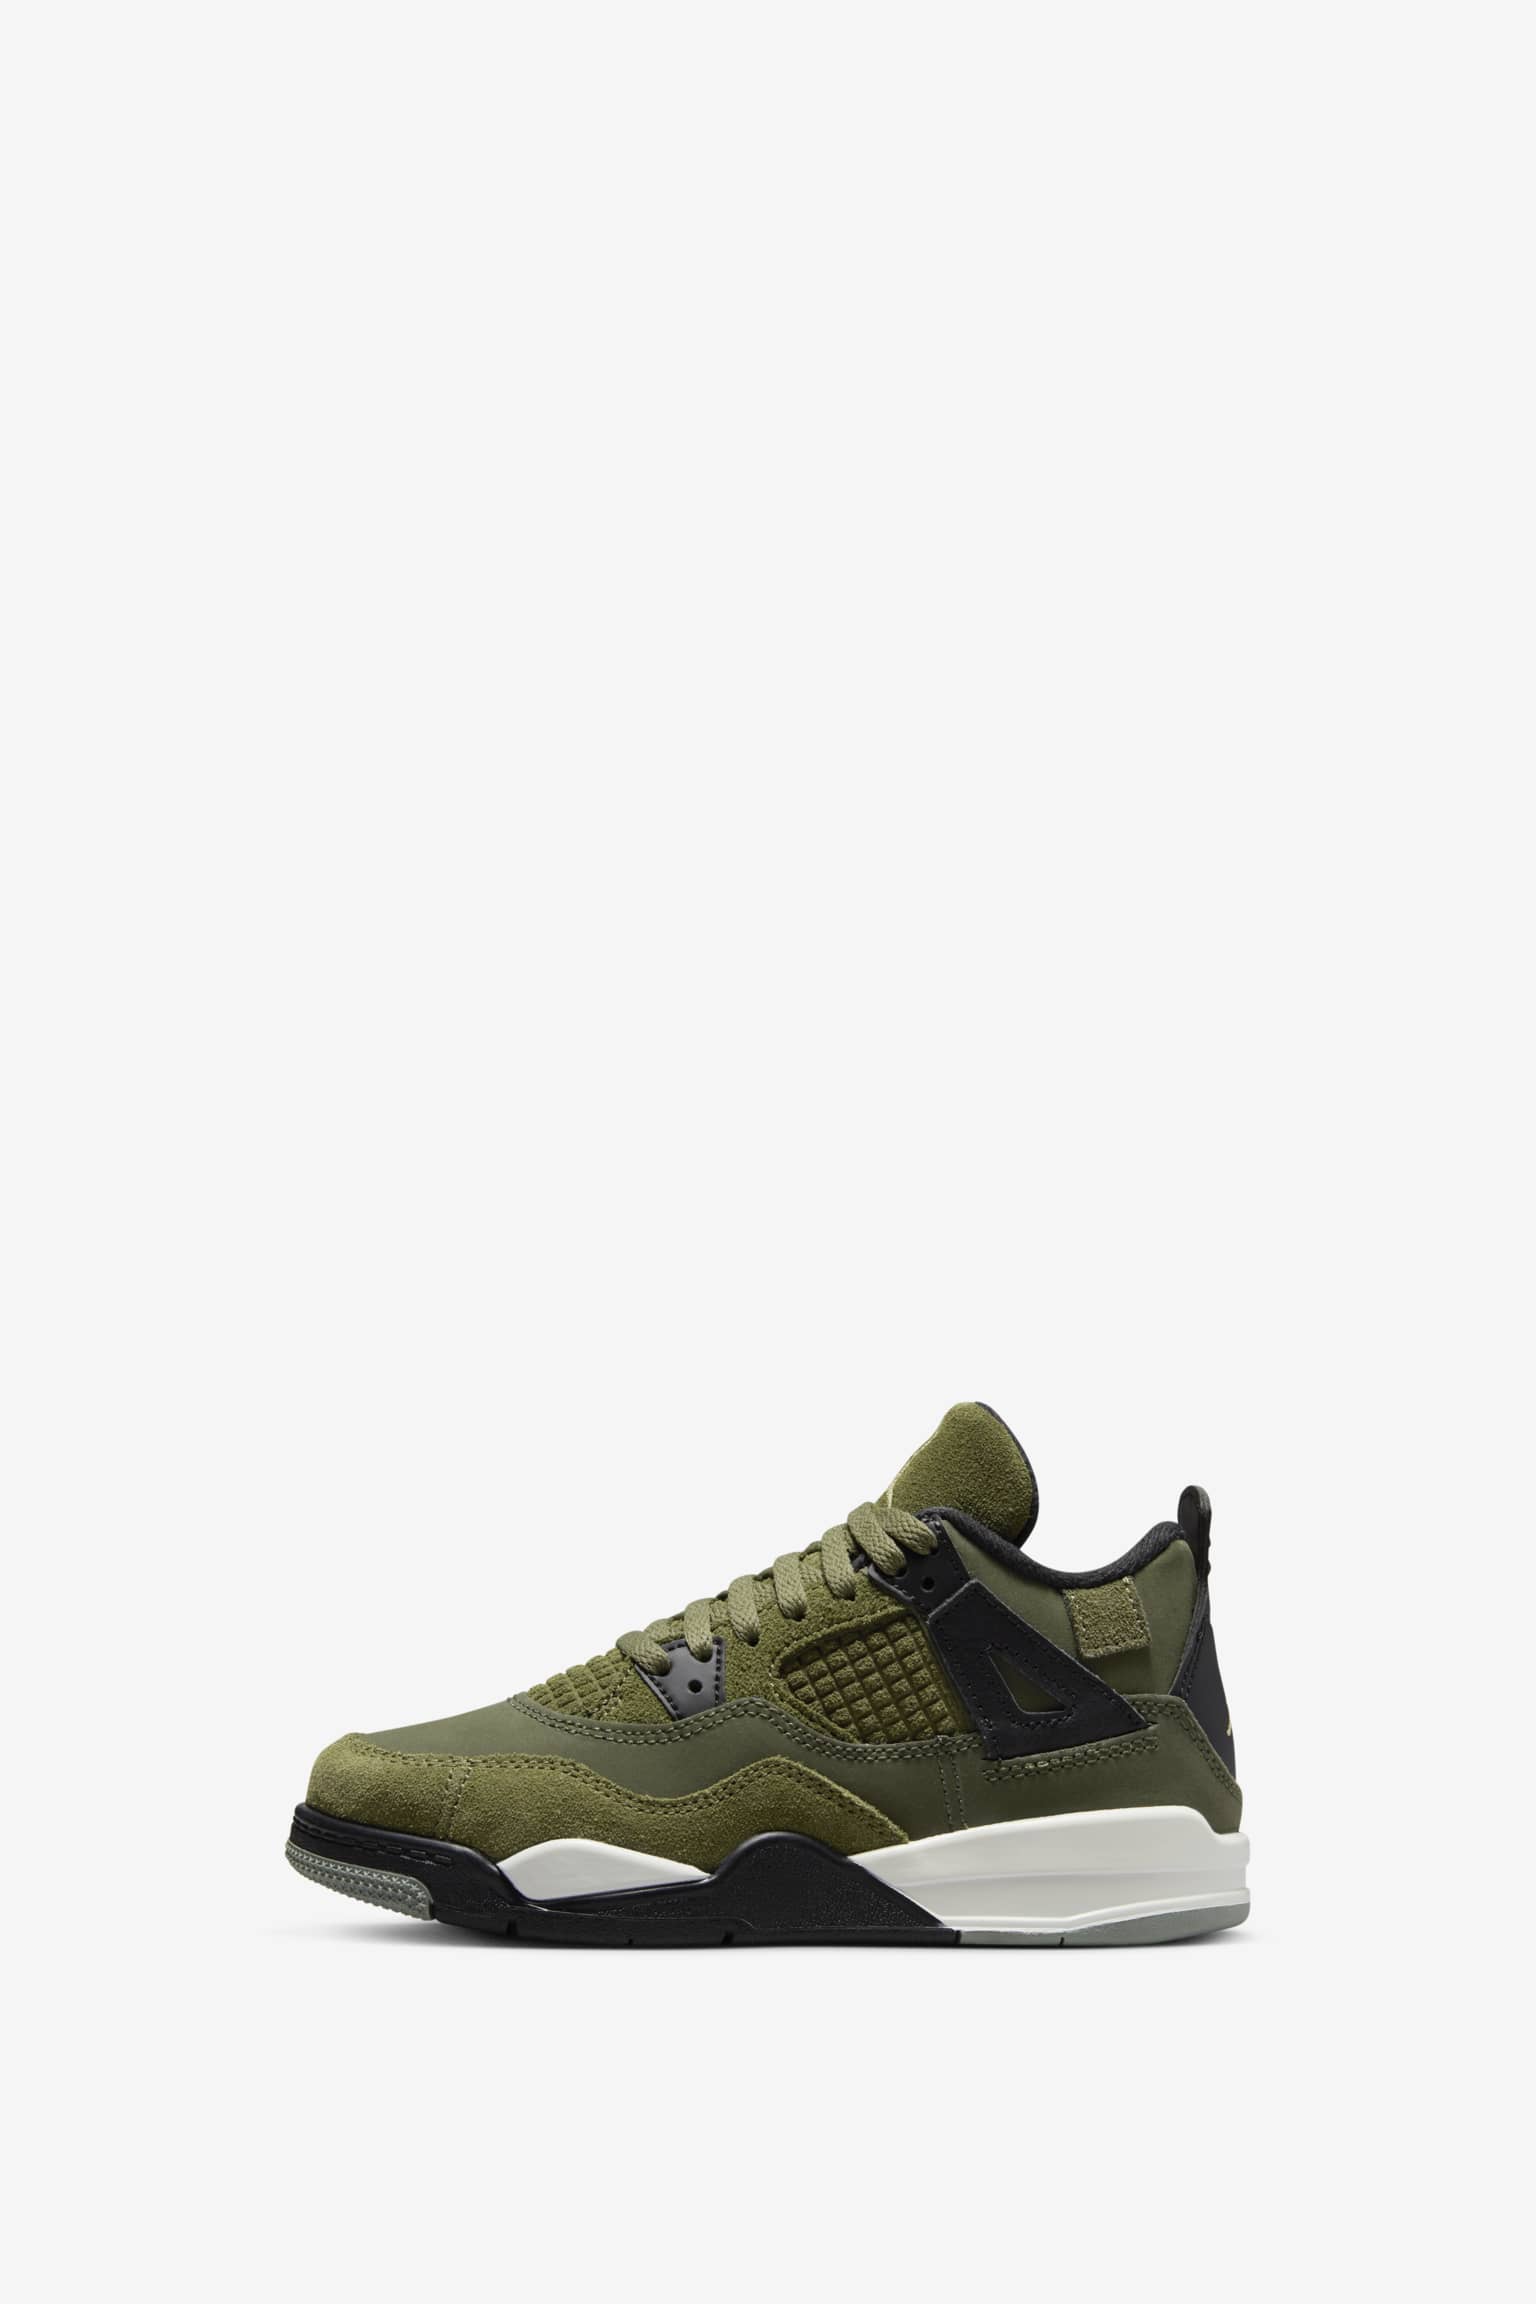 Air Jordan 4 Craft 'Olive' (FB9927-200) release date. Nike SNKRS CA